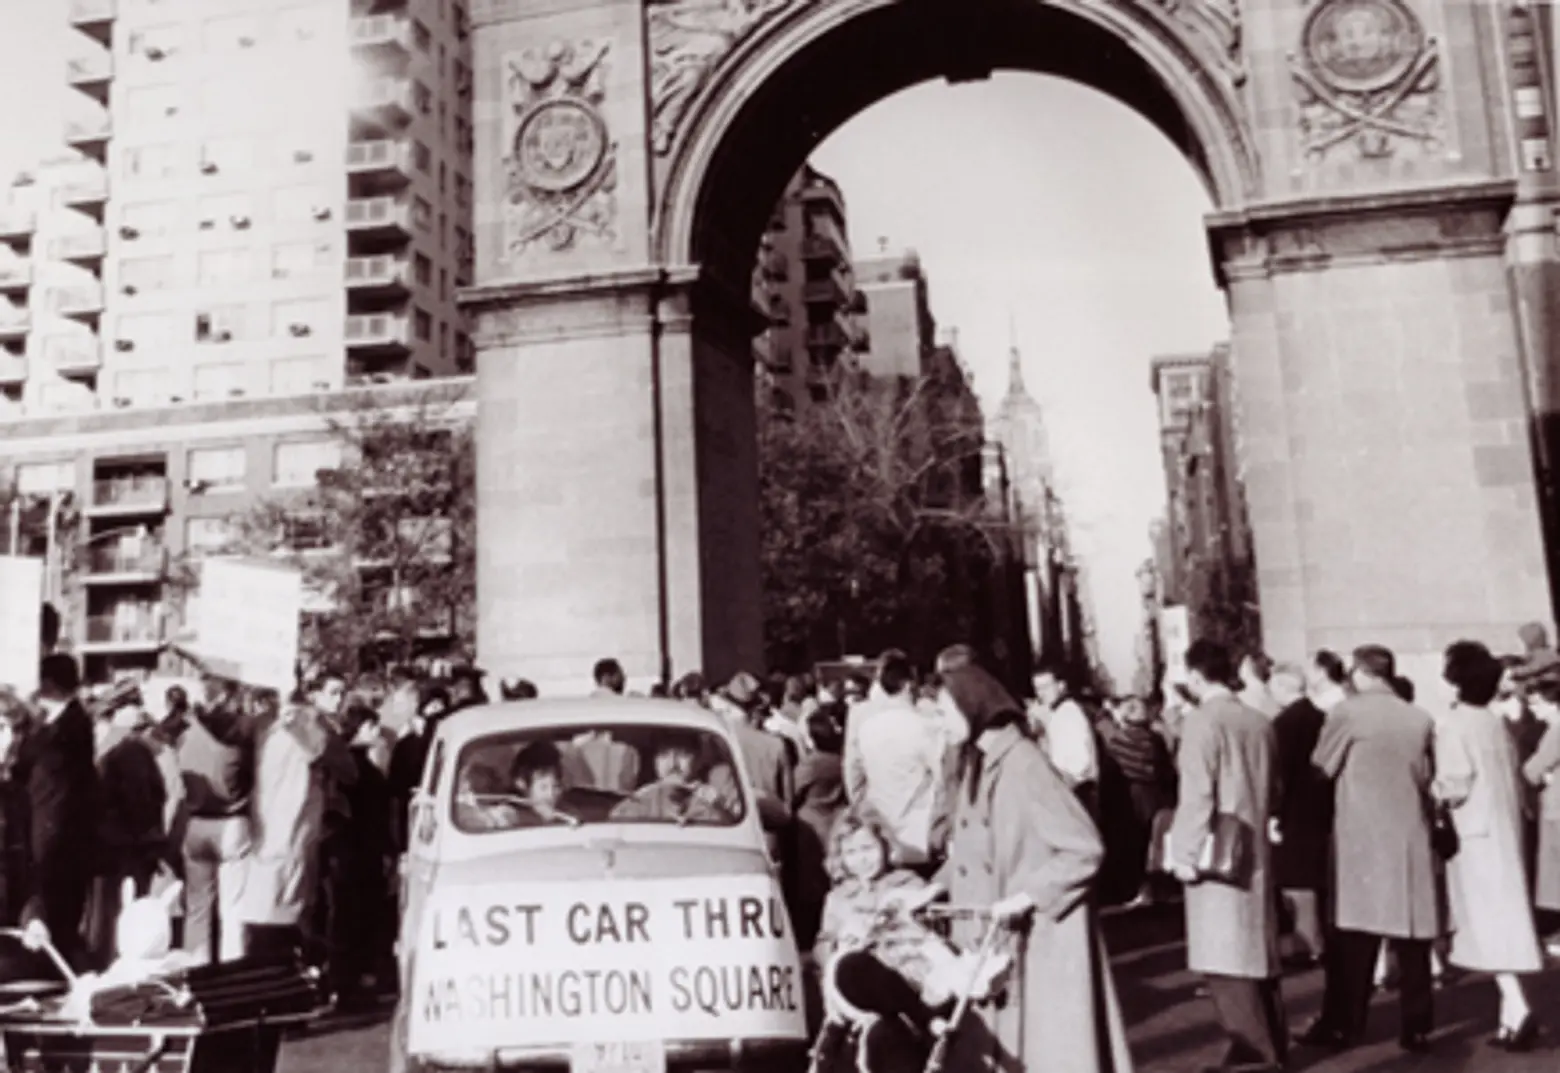 last car through washington square, GVSHP, Robert Moses, Greenwich Village history